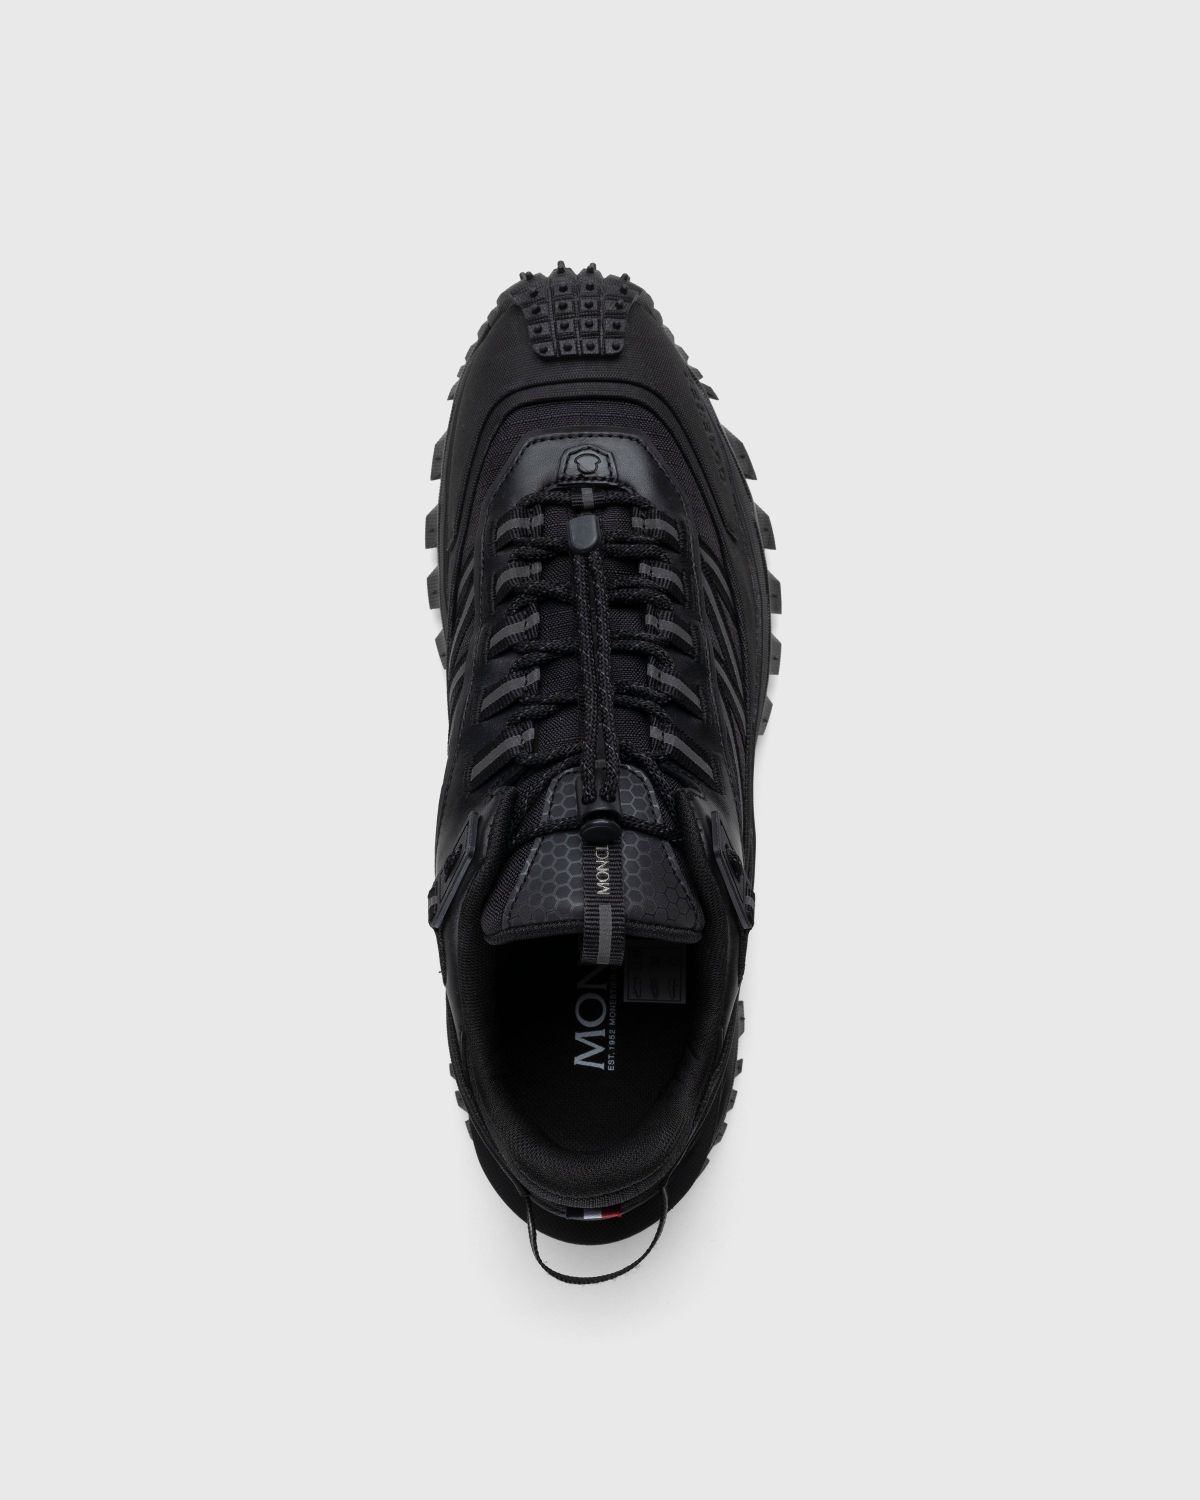 Moncler – Trailgrip GTX Sneakers Black - Low Top Sneakers - Black - Image 5